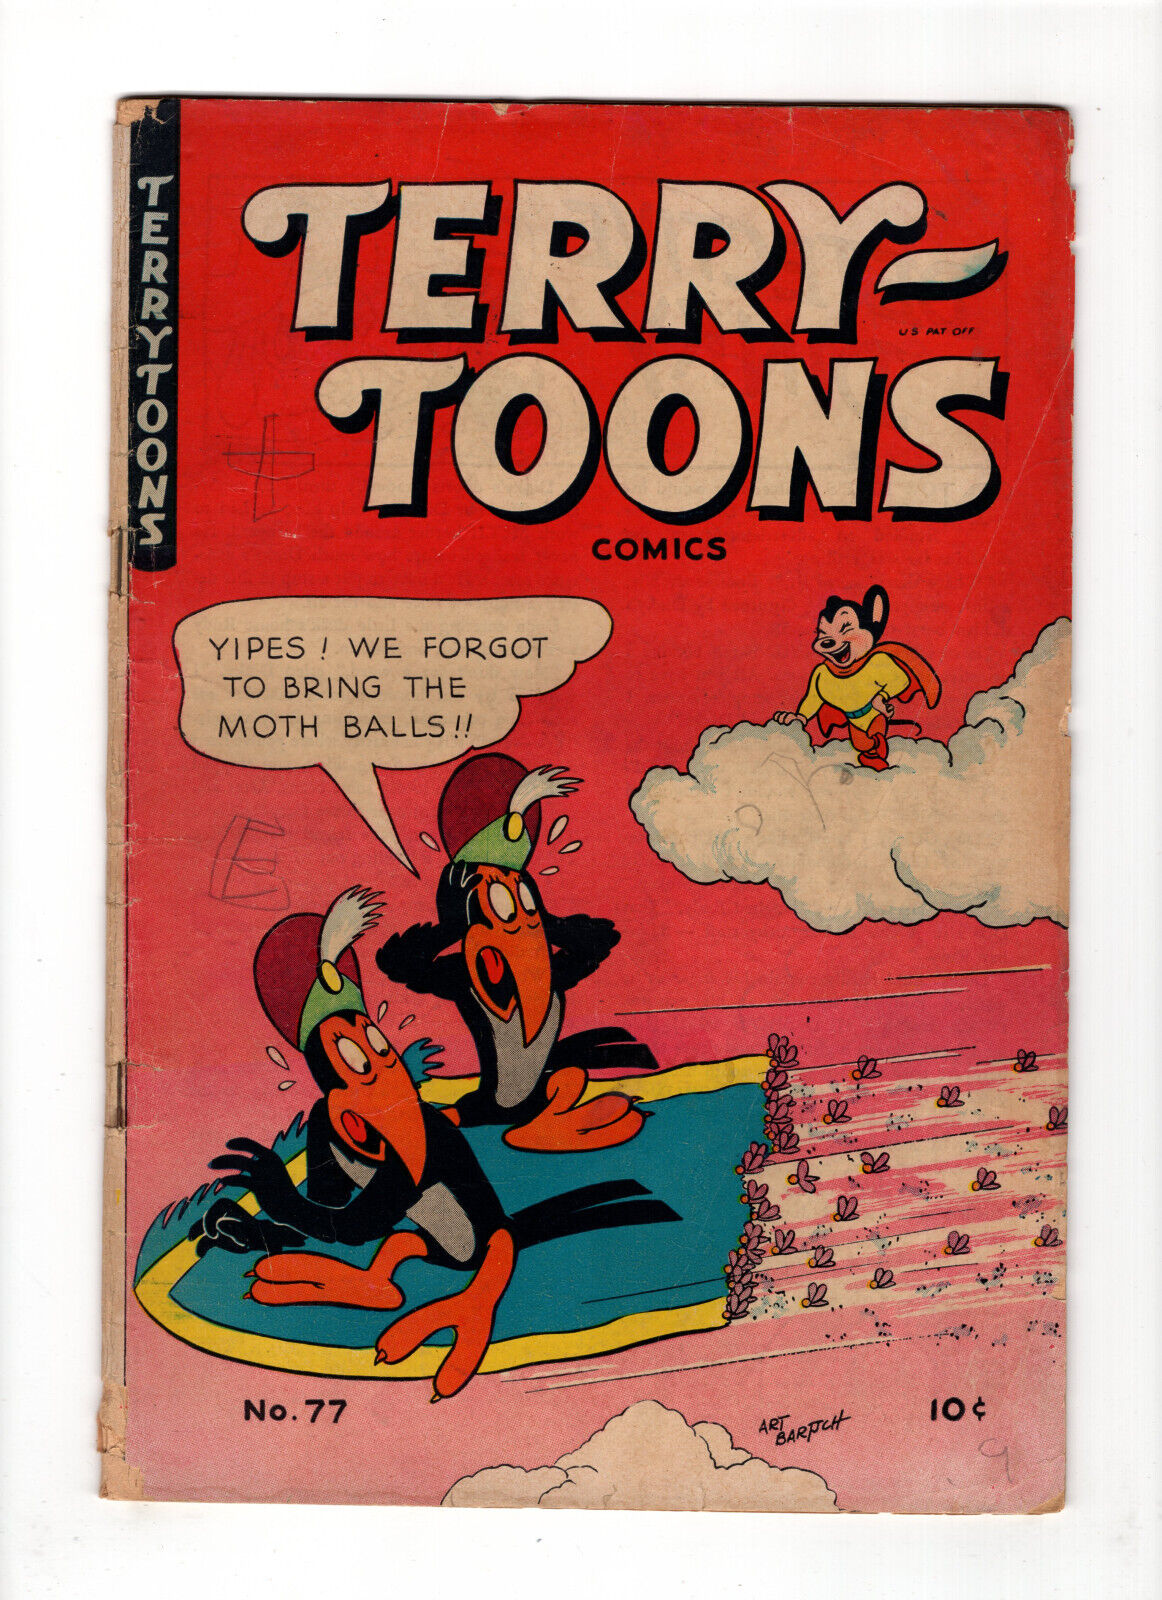 Terry-Toons Comics #77 (1950, Terry-Toons Comics)